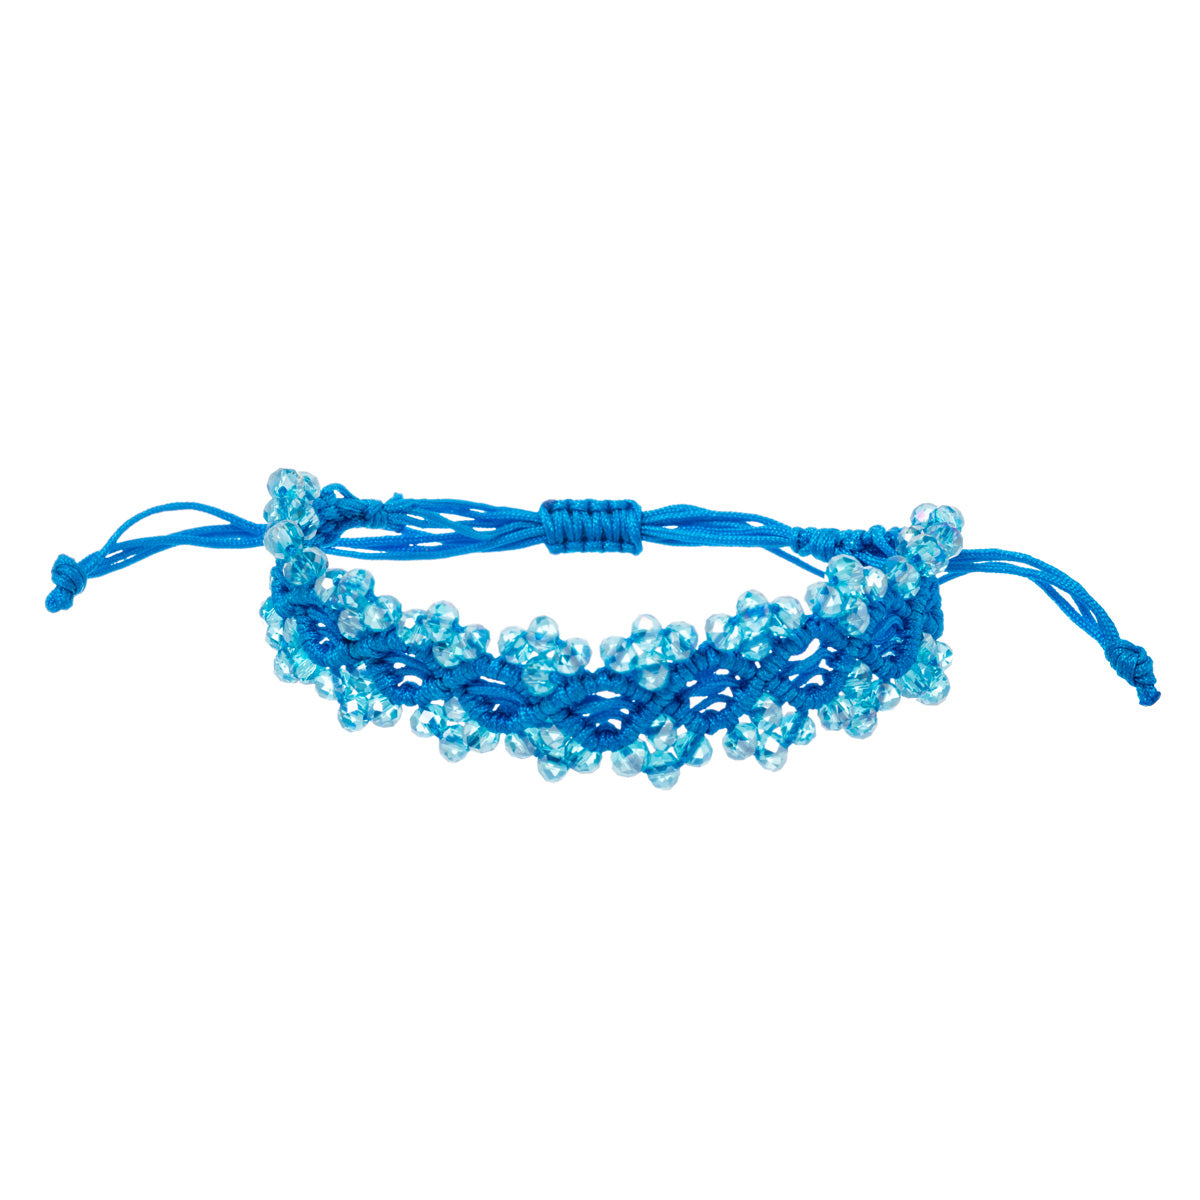 Fabric bracelet with glass beads